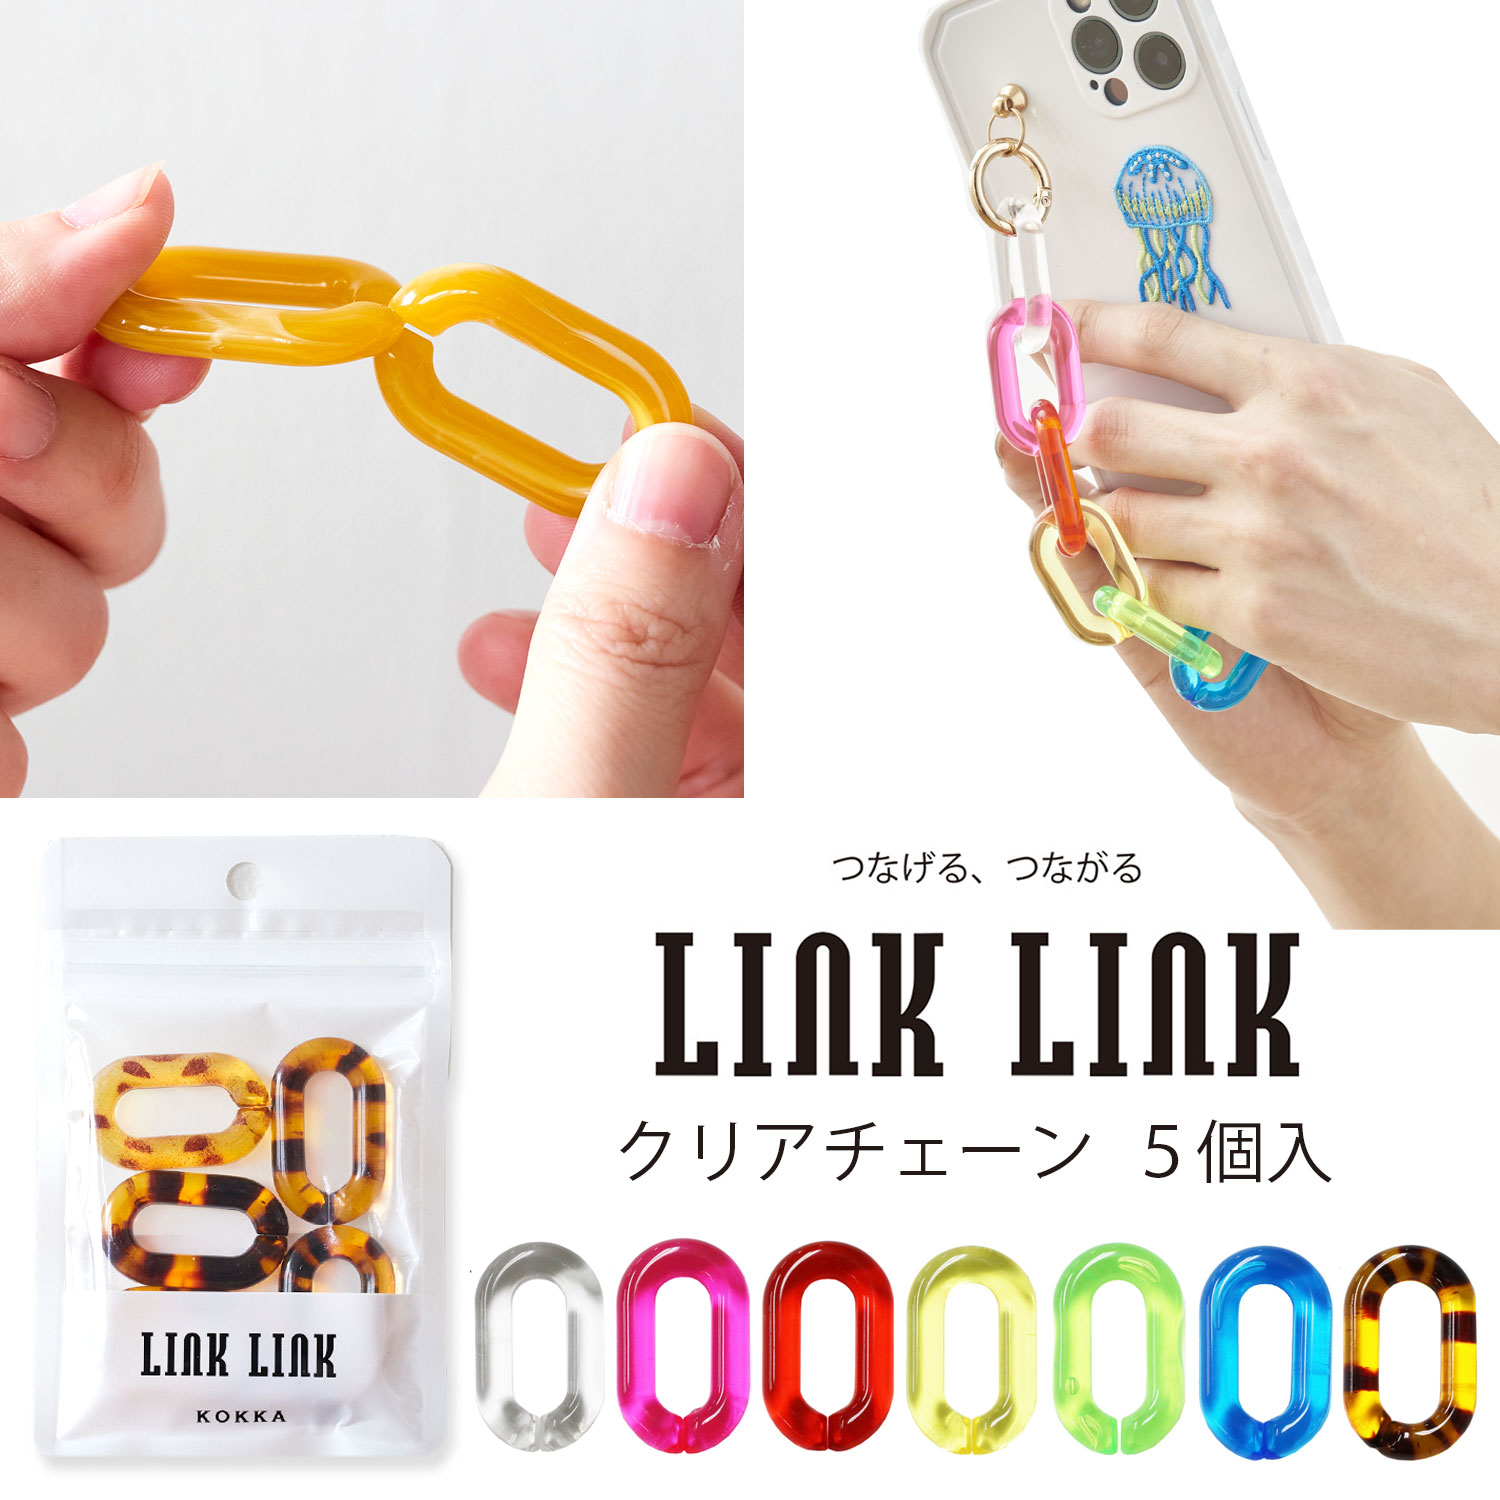 LINK LINK クリアチェーン 同色5個セット 全7色 アクリルパーツ プラパーツ 鎖 スマホケース ストラップ ホルダー ハンドル 持ち手 アクセサリー約24mmx39mm